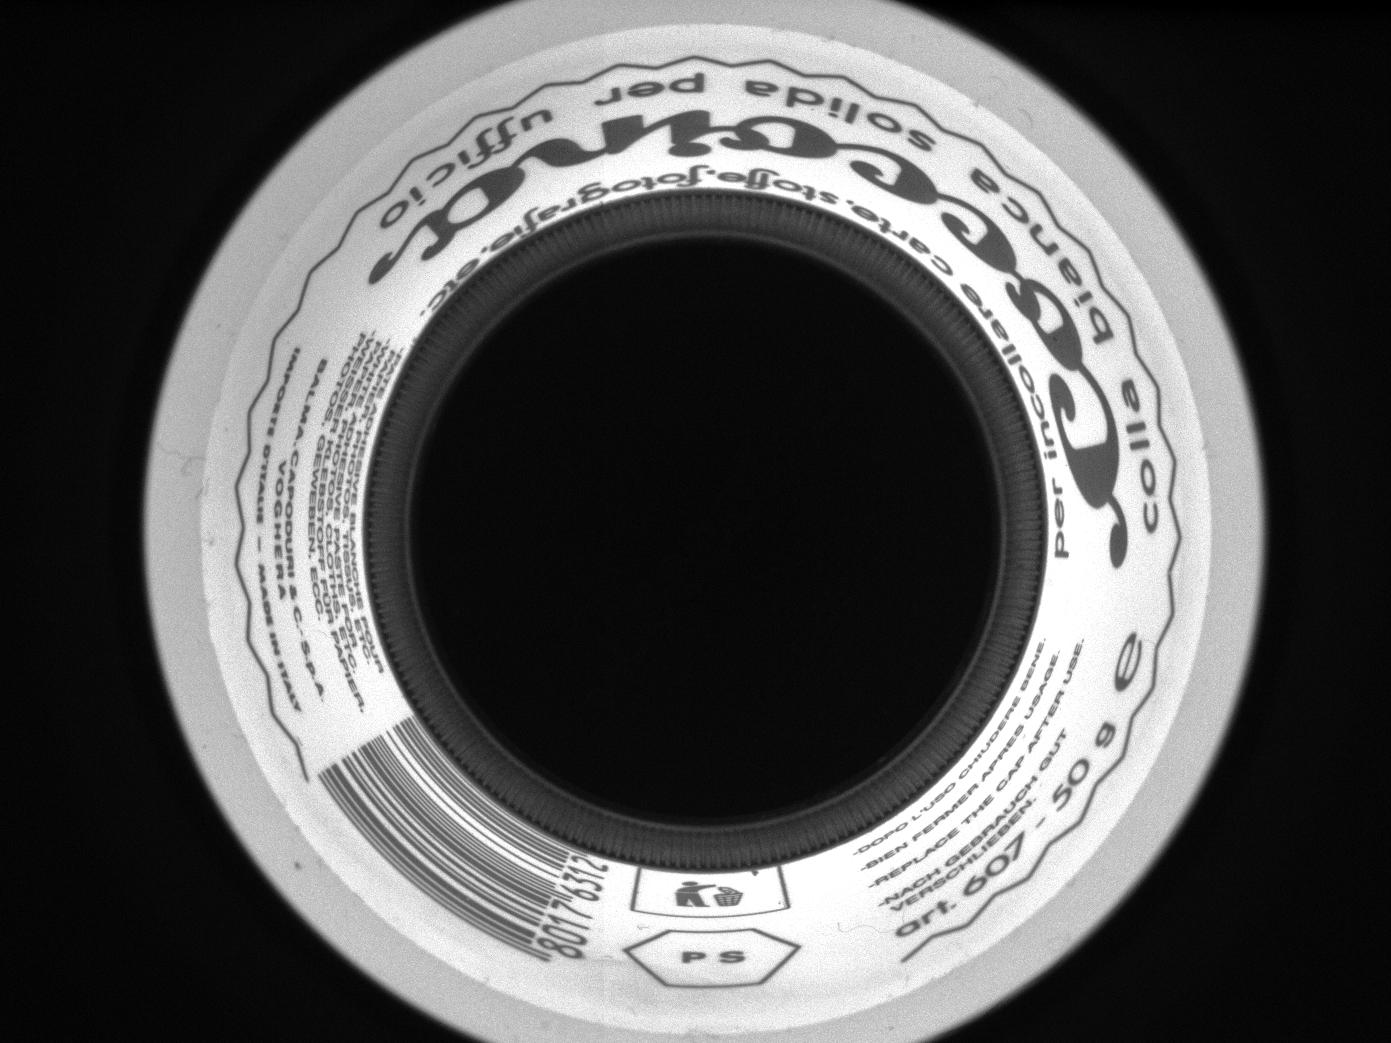 Műanyag tégely képe pericentrikus optikával (fotó: Opto-Engineering)